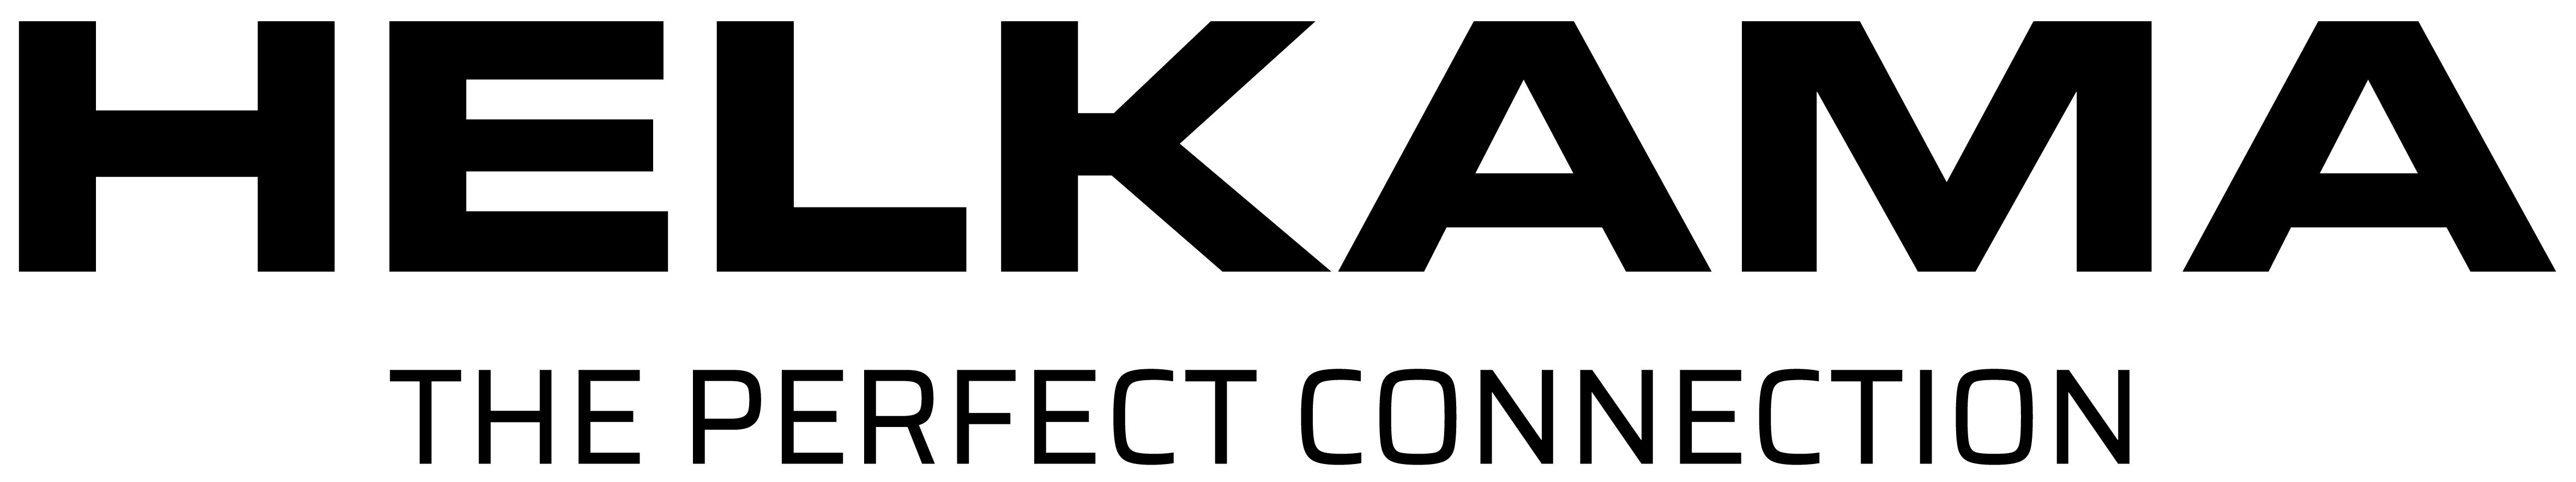 Helkama logo